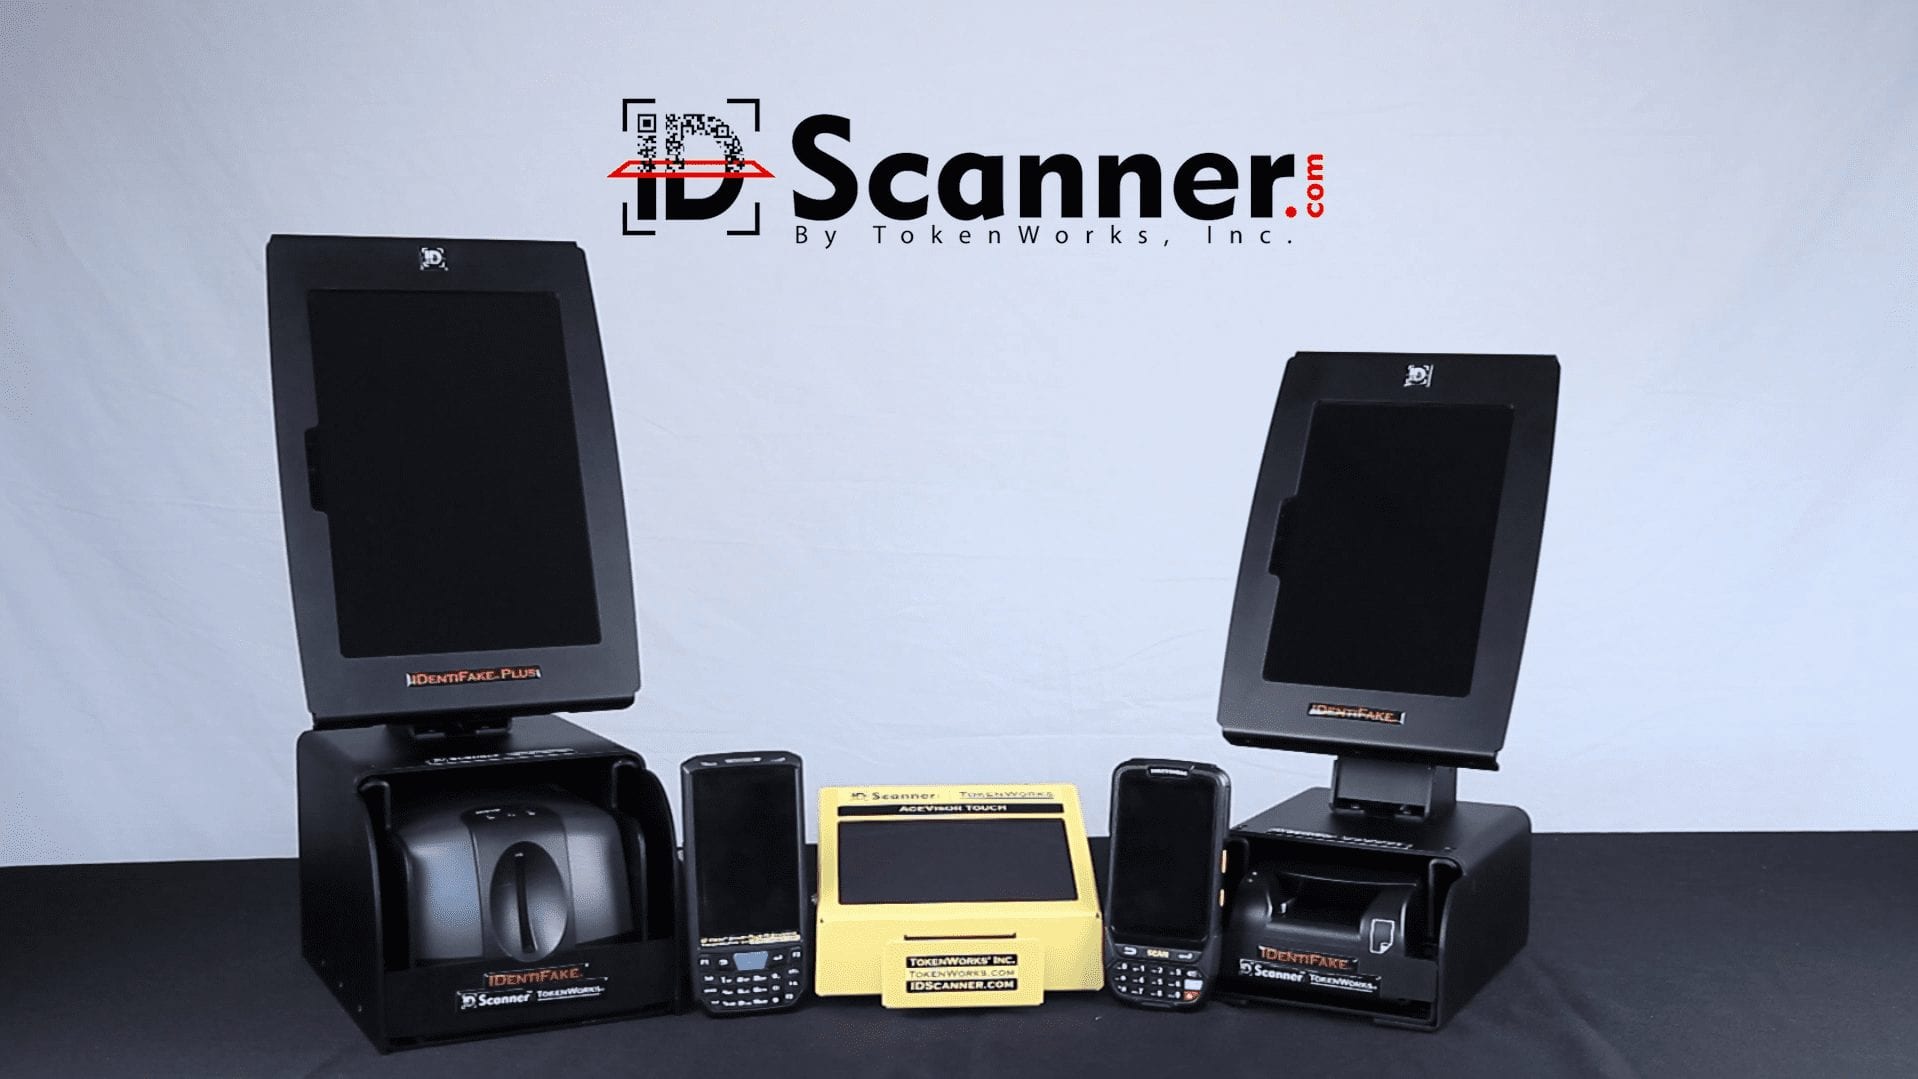 VIDEO: Introducing IDentiFake Fake ID Scanner - IDScanner.com.